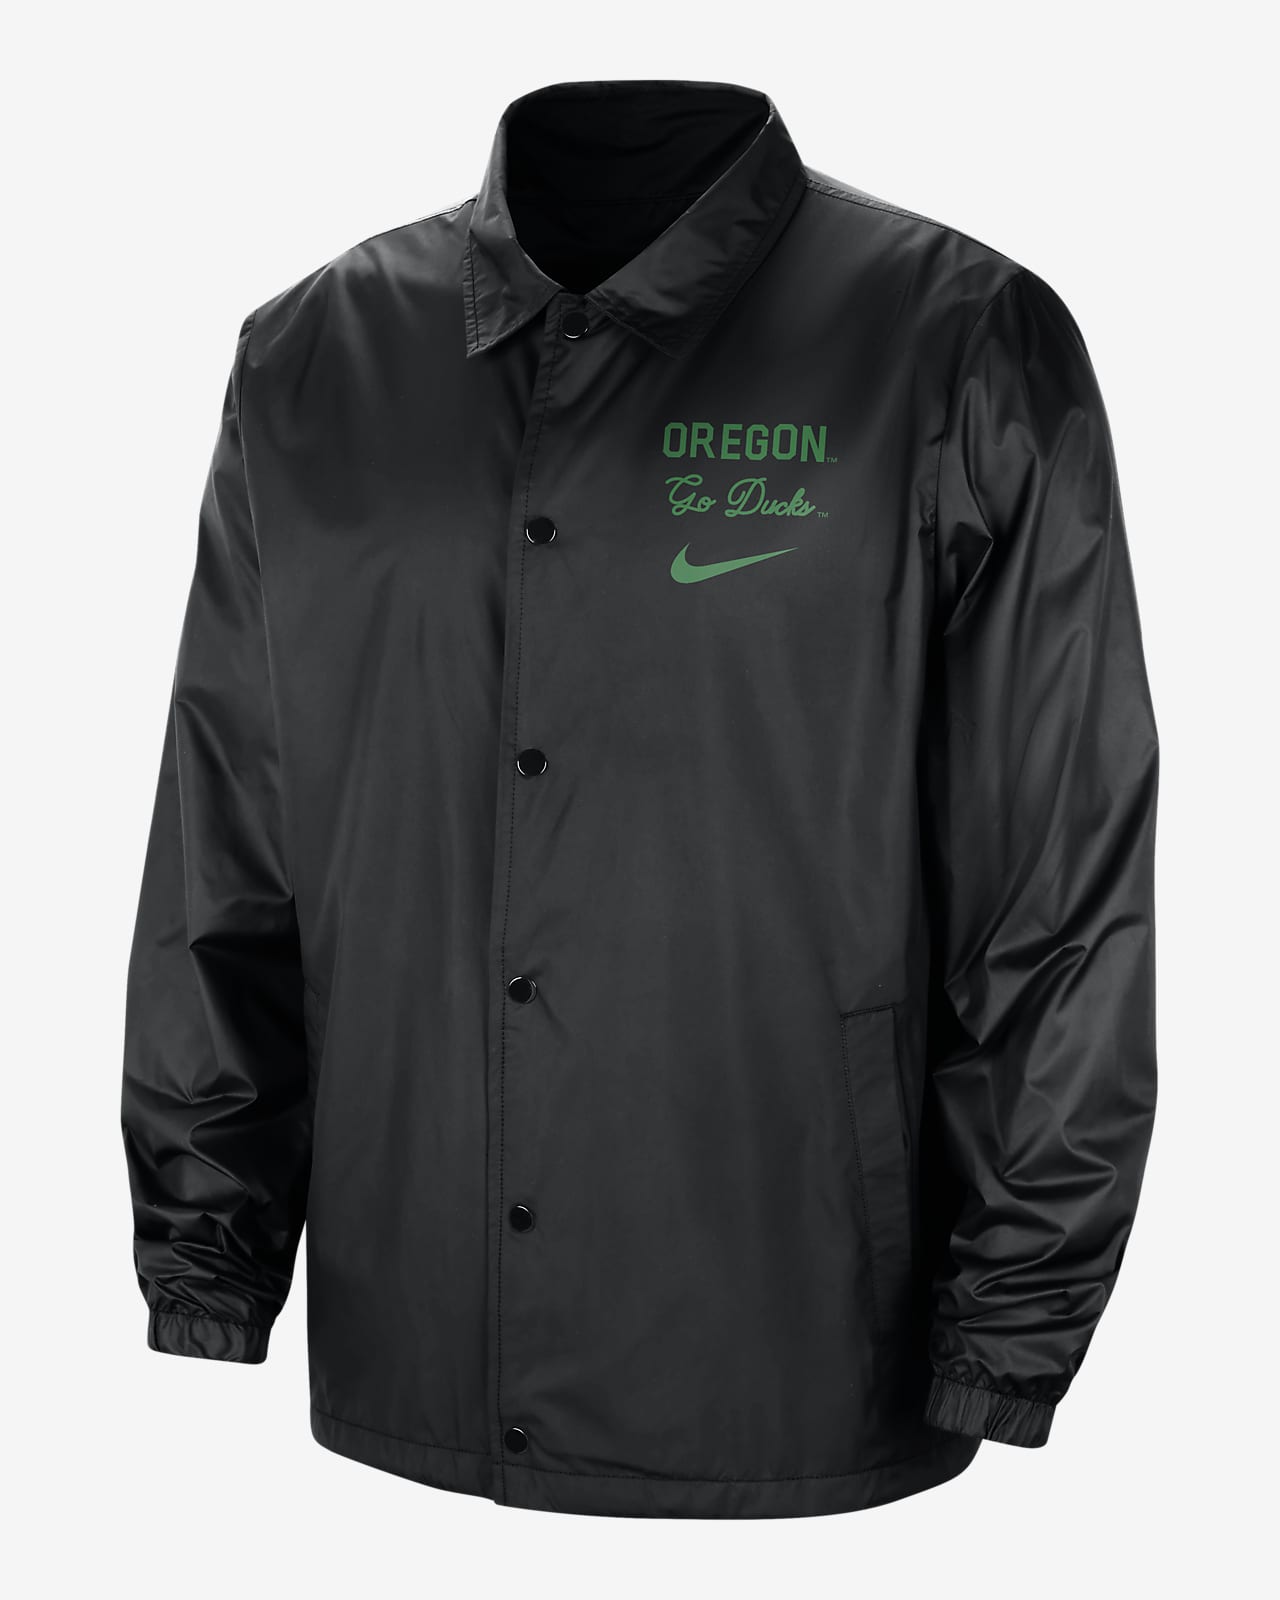 Chamarra universitaria Nike para hombre Oregon